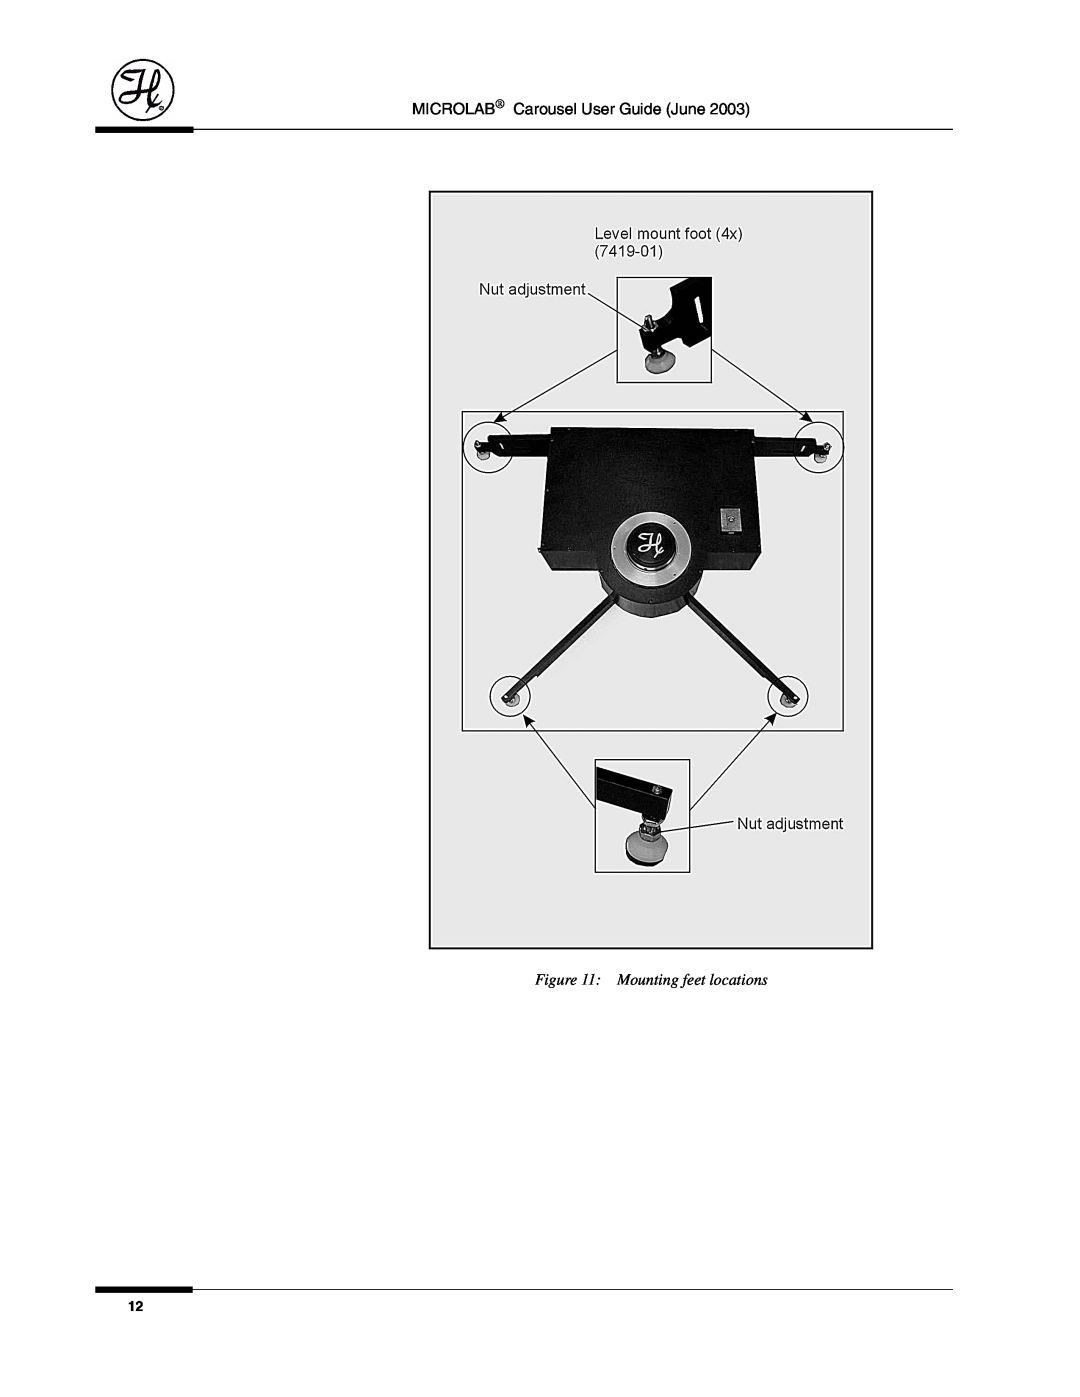 Hamilton Electronics 8534-01 manual MICROLAB Carousel User Guide June, Mounting feet locations 